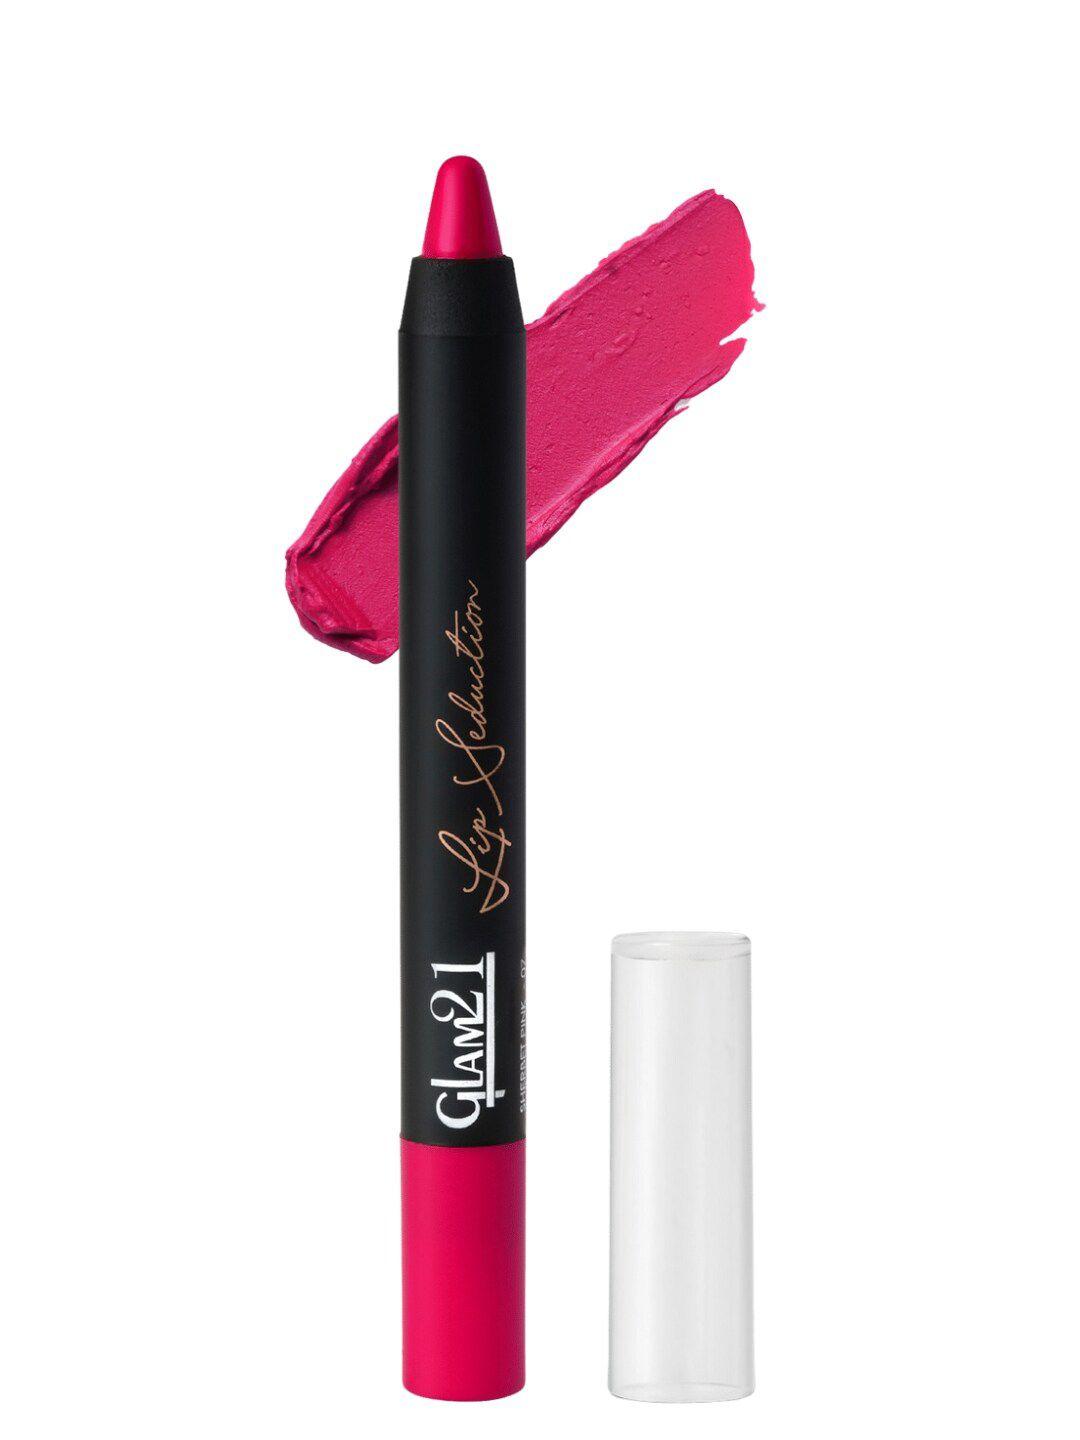 glam21 lip seduction non-transfer long-lasting crayon lipstick 2.8g - very magenta 08